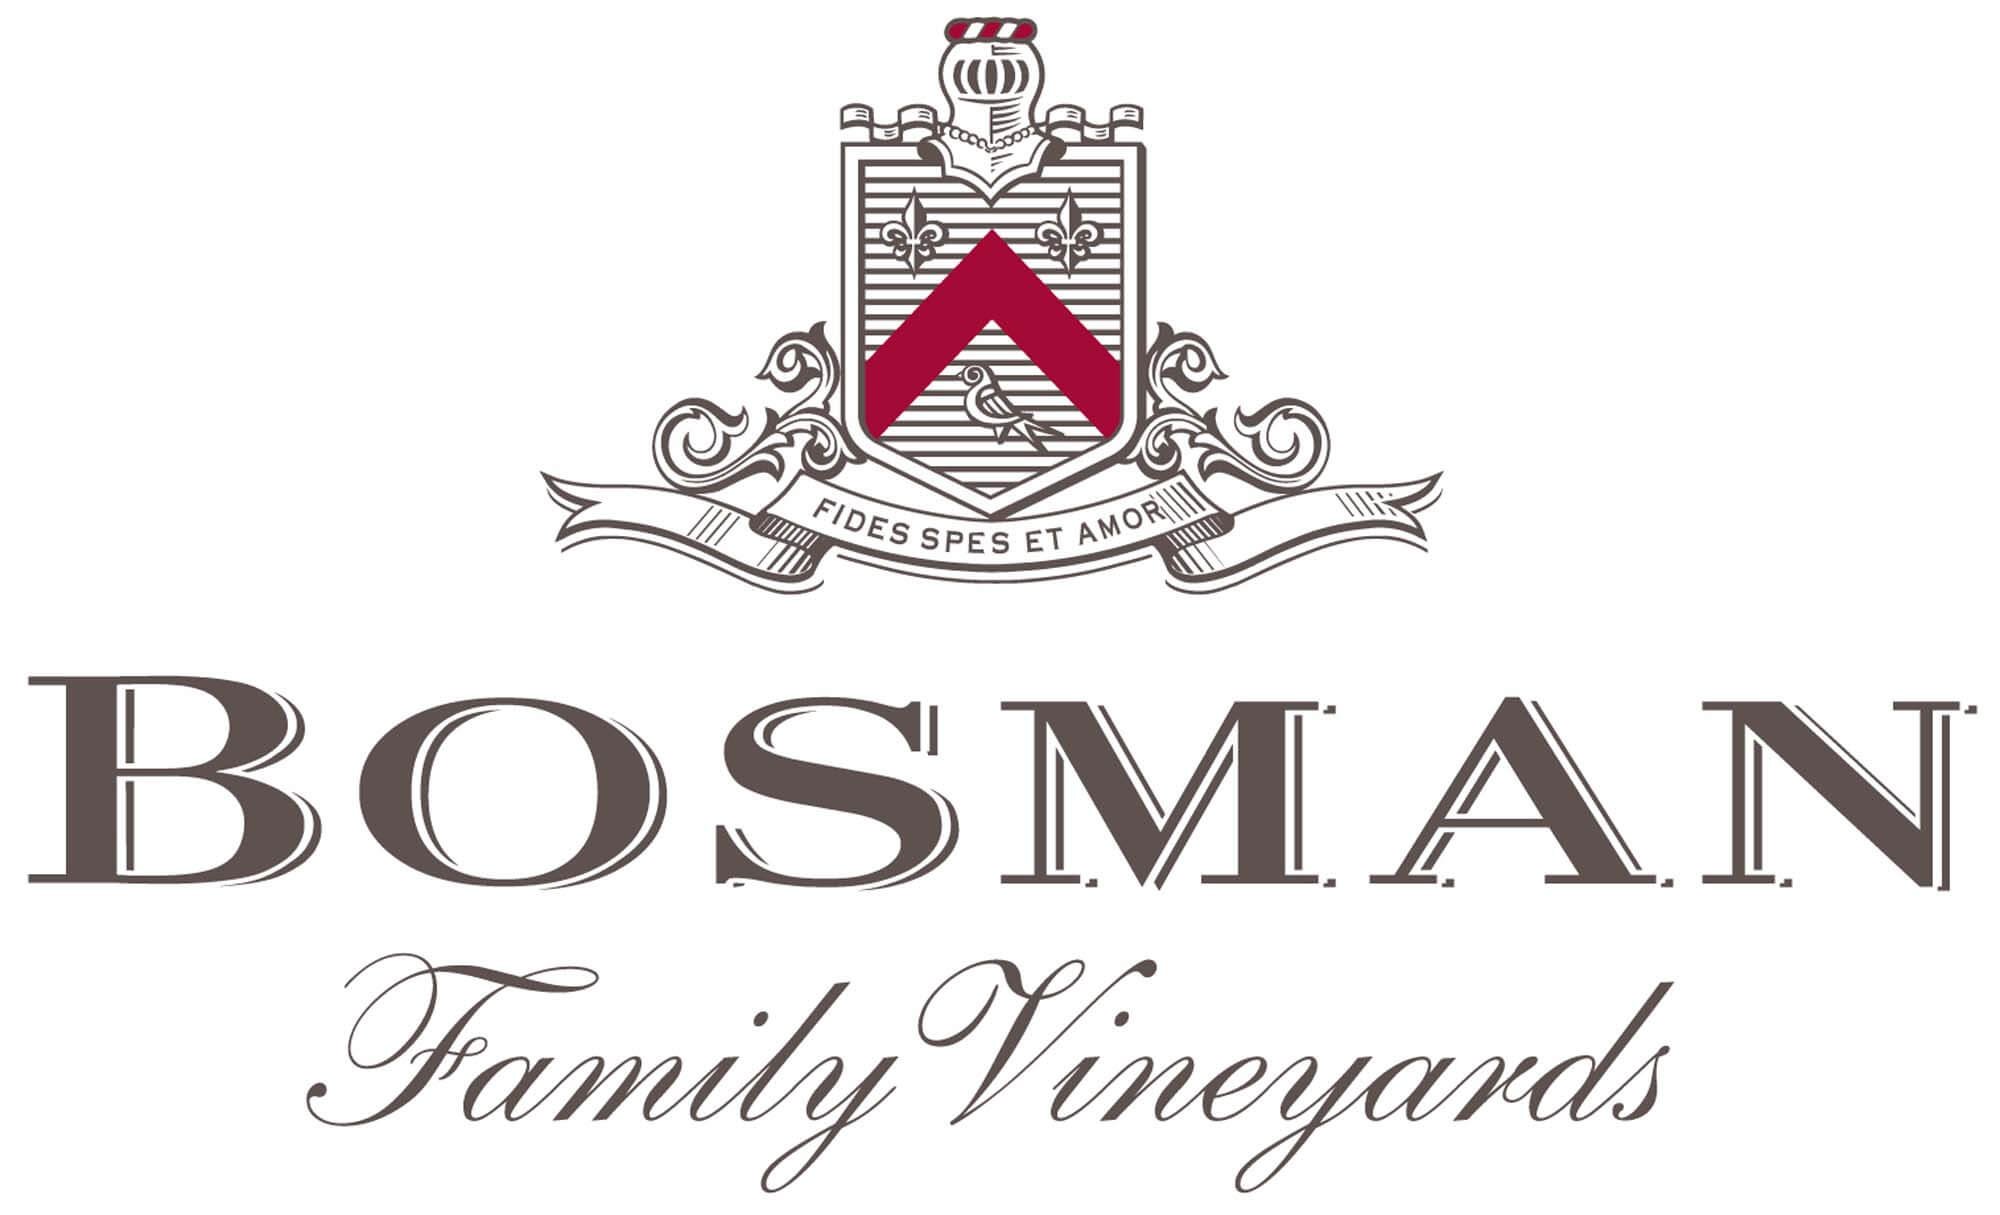 Bosman Family Vineyards